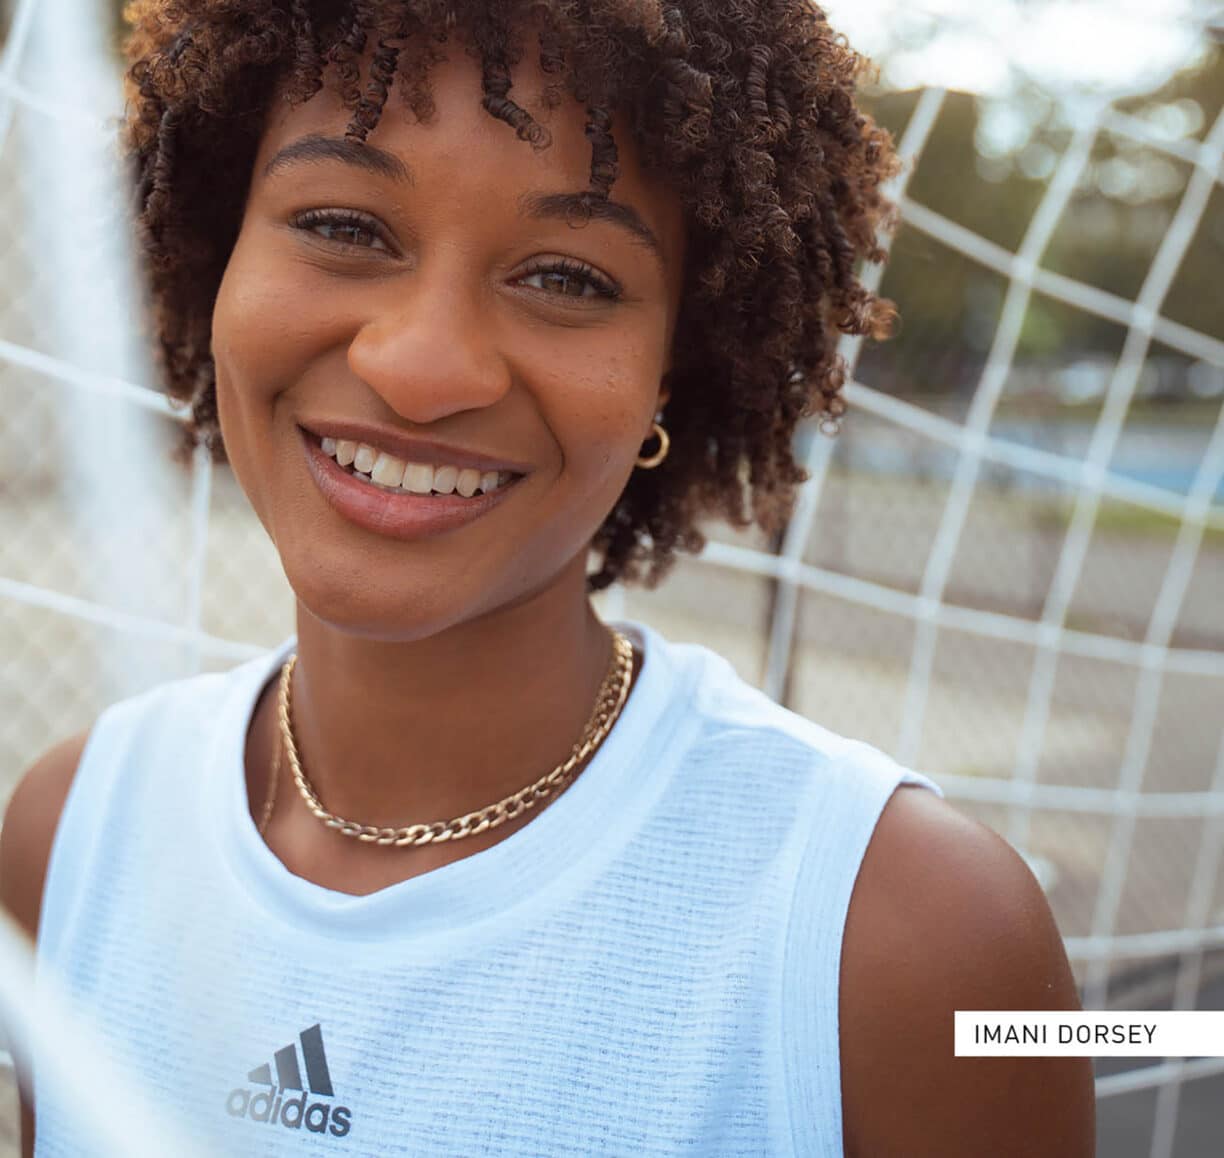 Adidas black youth community programs 3